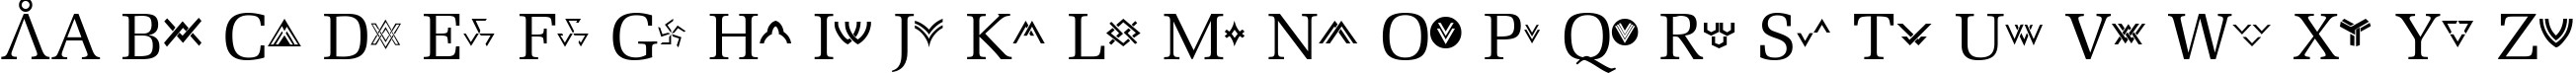 Пример написания английского алфавита шрифтом Stargate